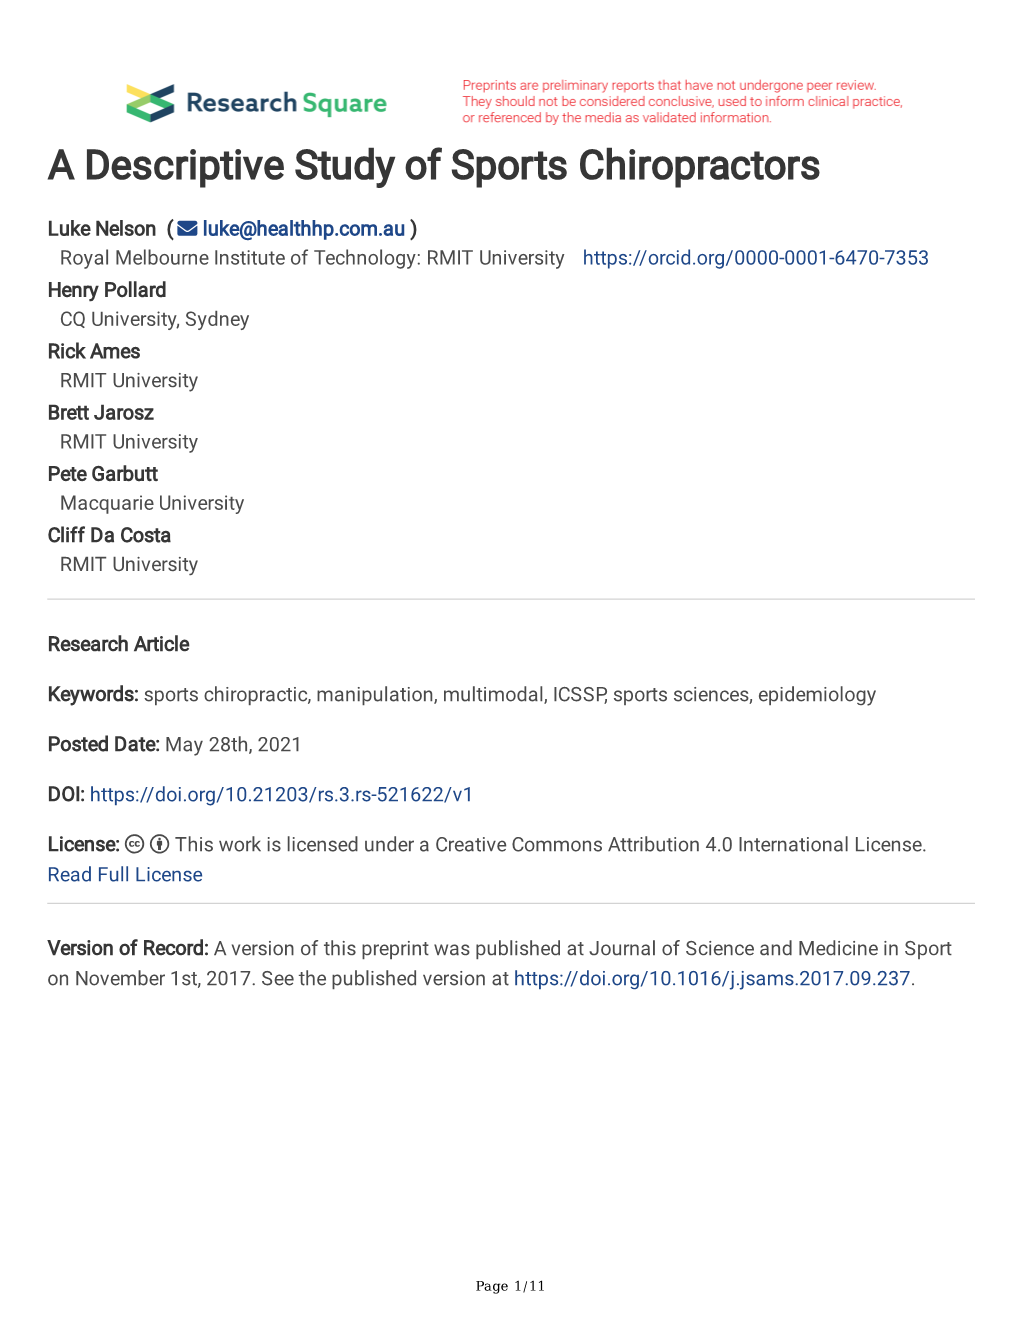 A Descriptive Study of Sports Chiropractors